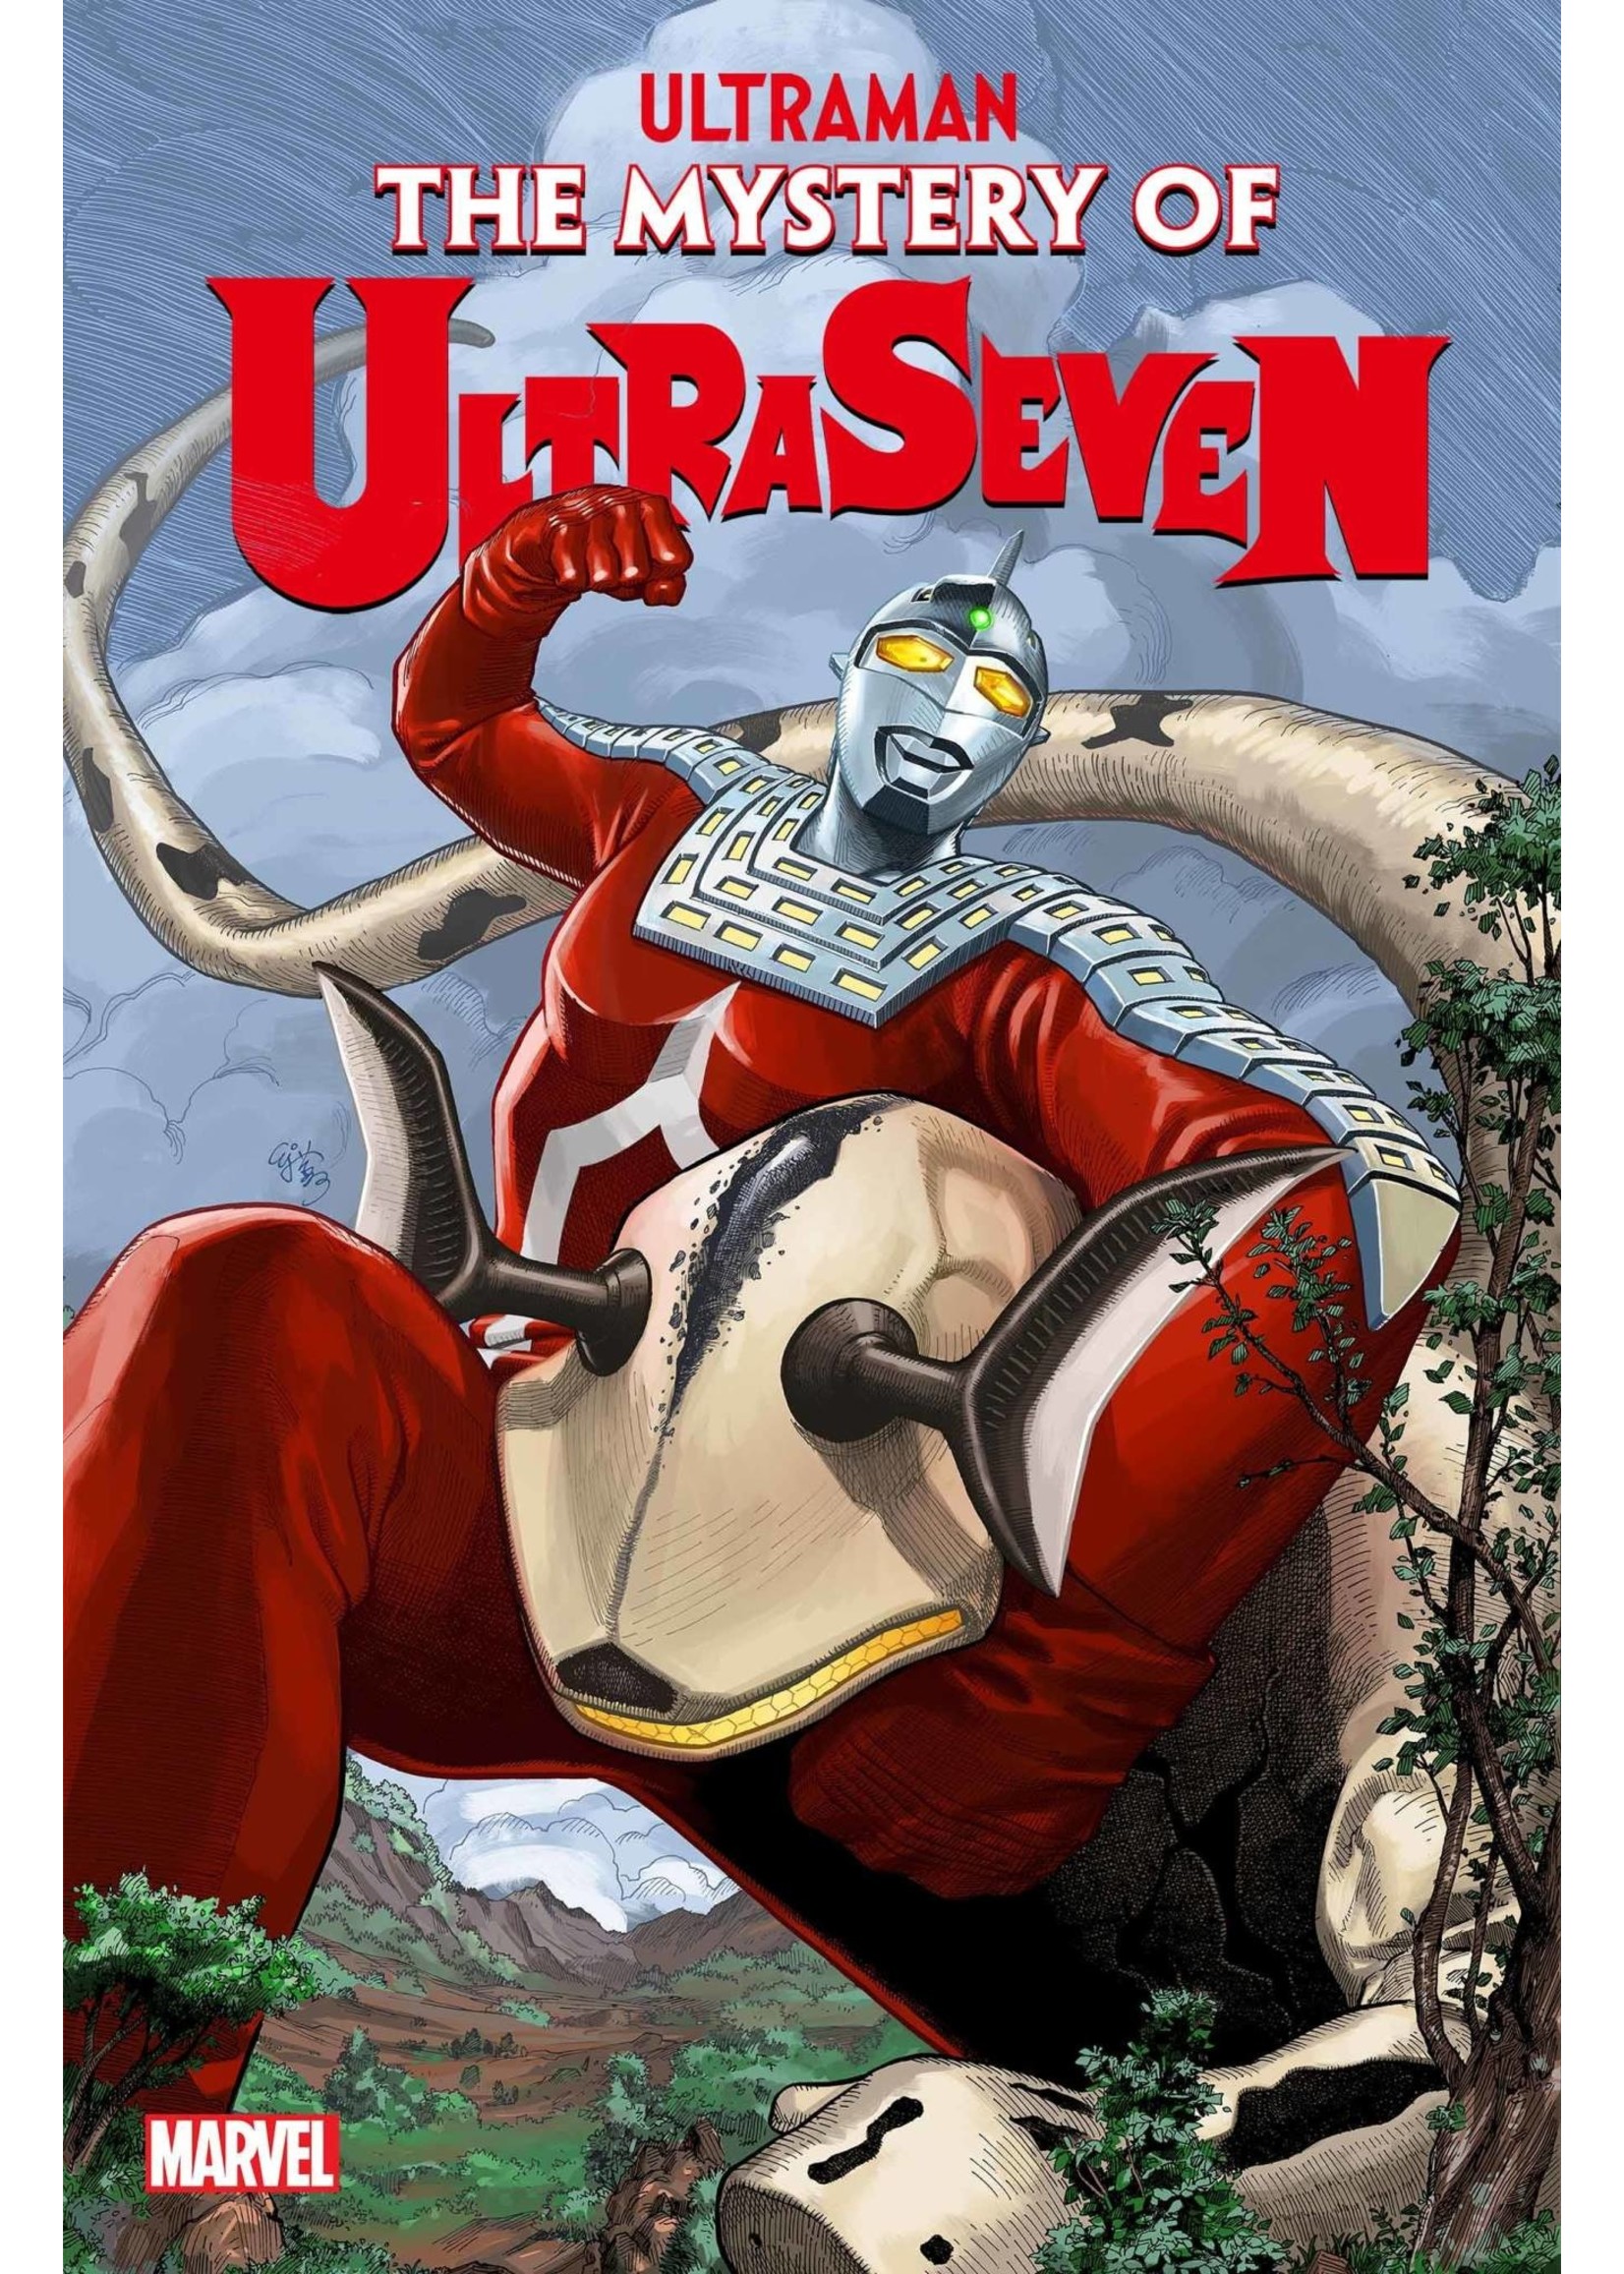 MARVEL COMICS ULTRAMAN THE MYSTERY OF ULTRASEVEN #1